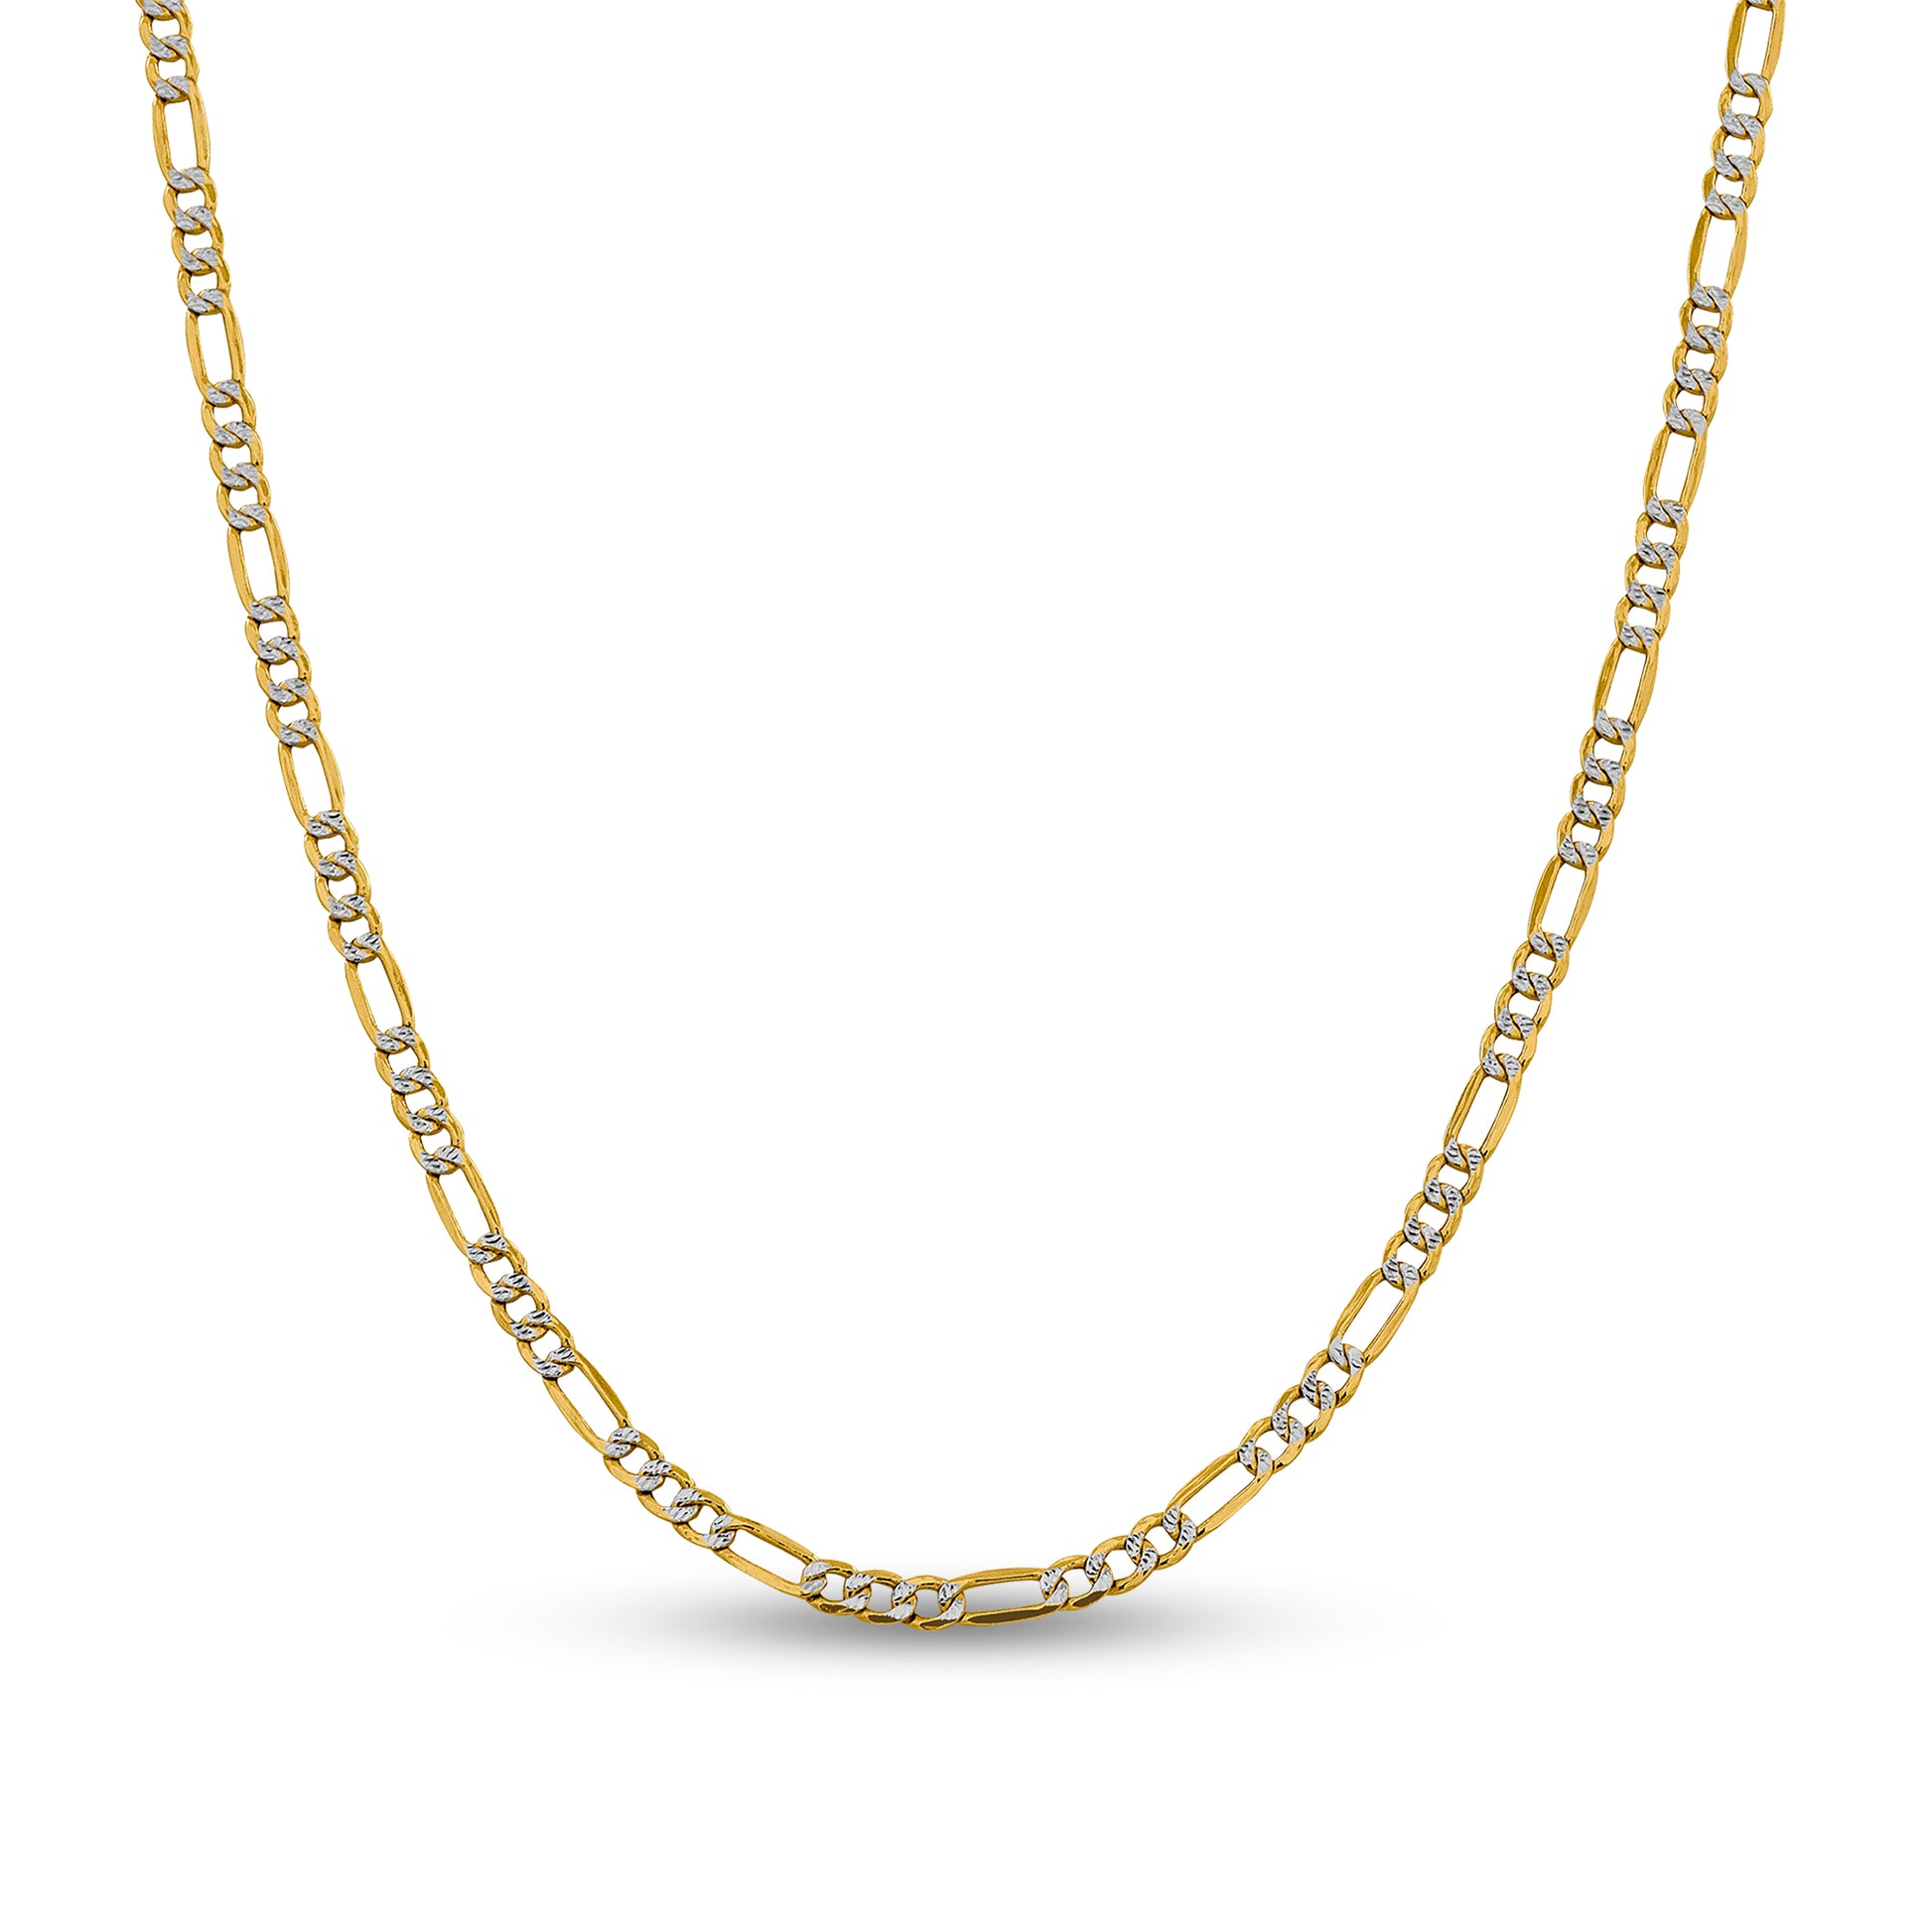 10k two-tone gold figaro chain 